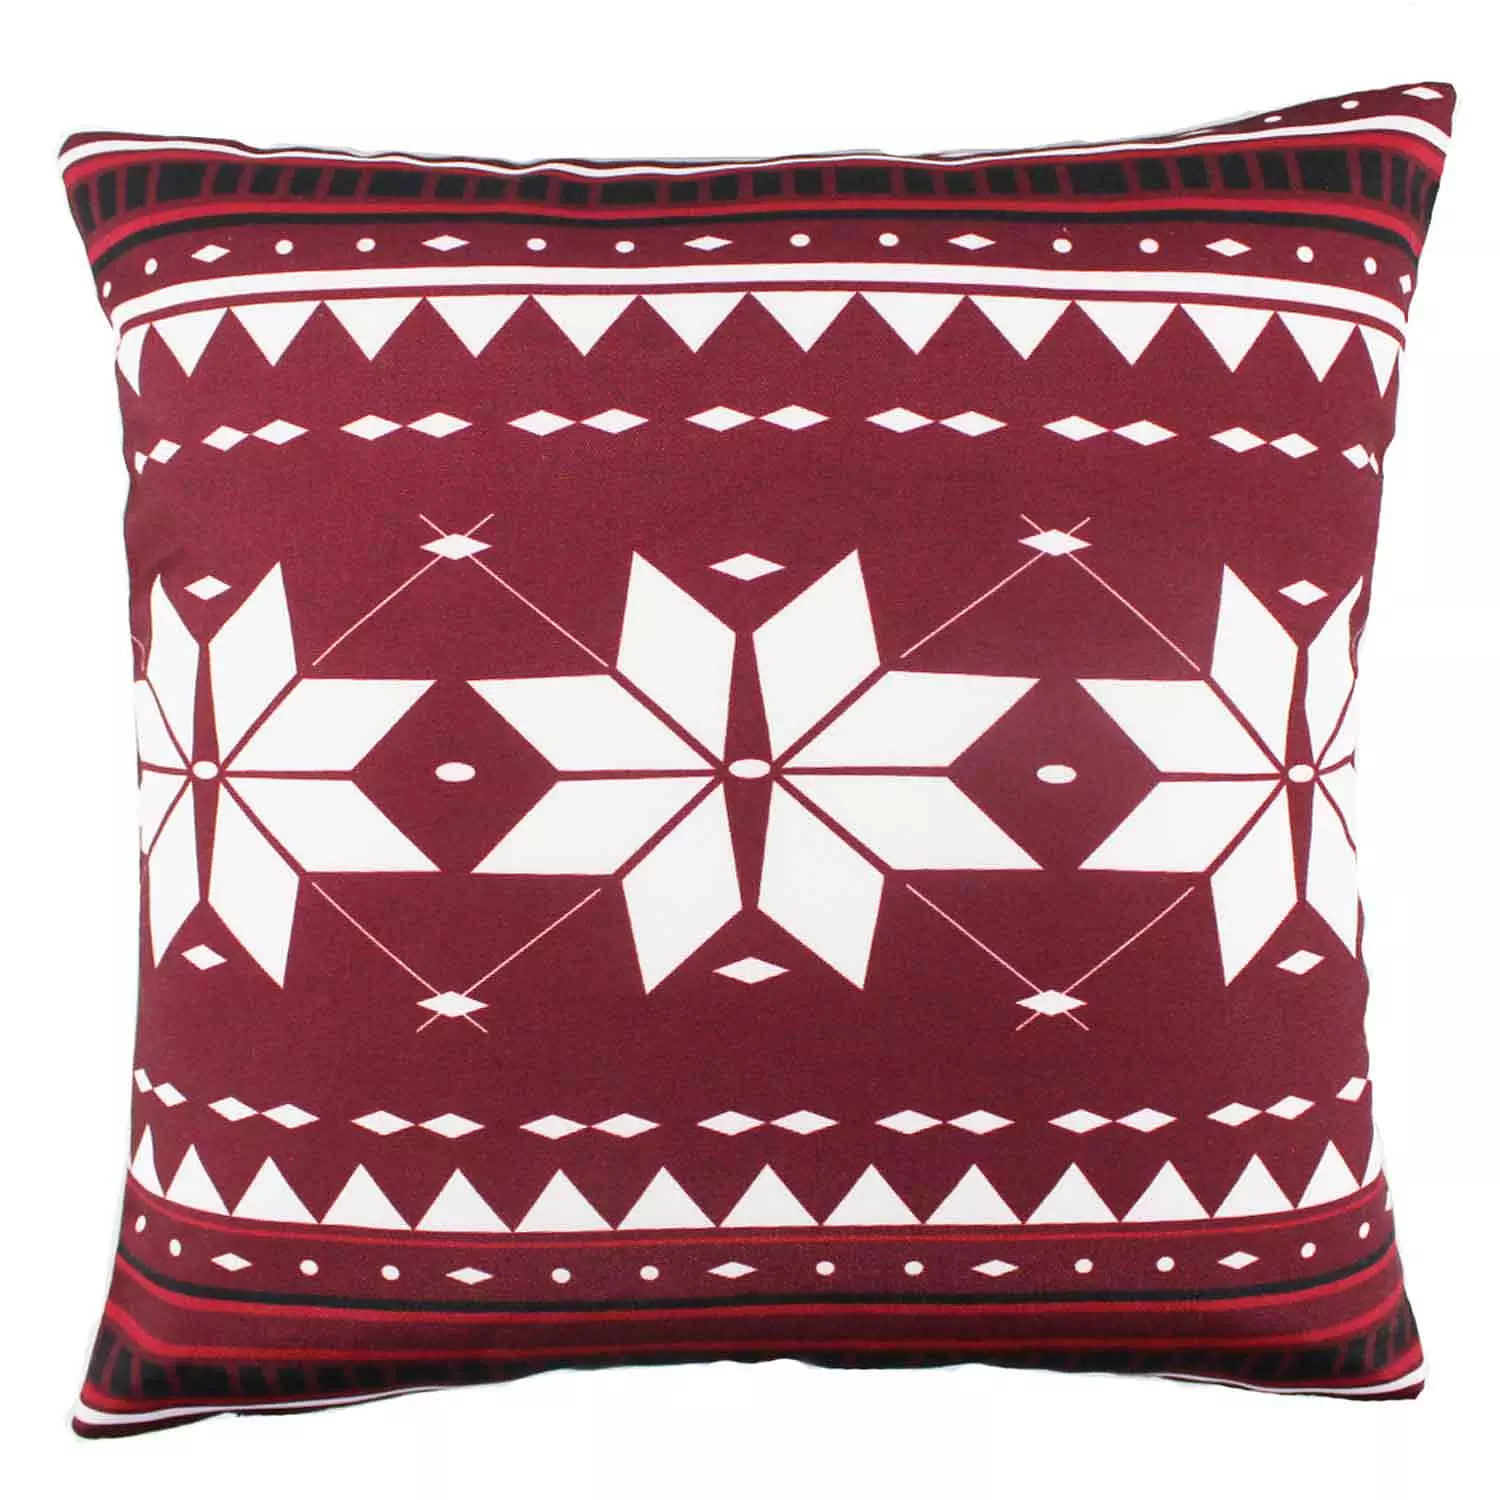 Snowflake pattern printed cushion, 18"x18", red